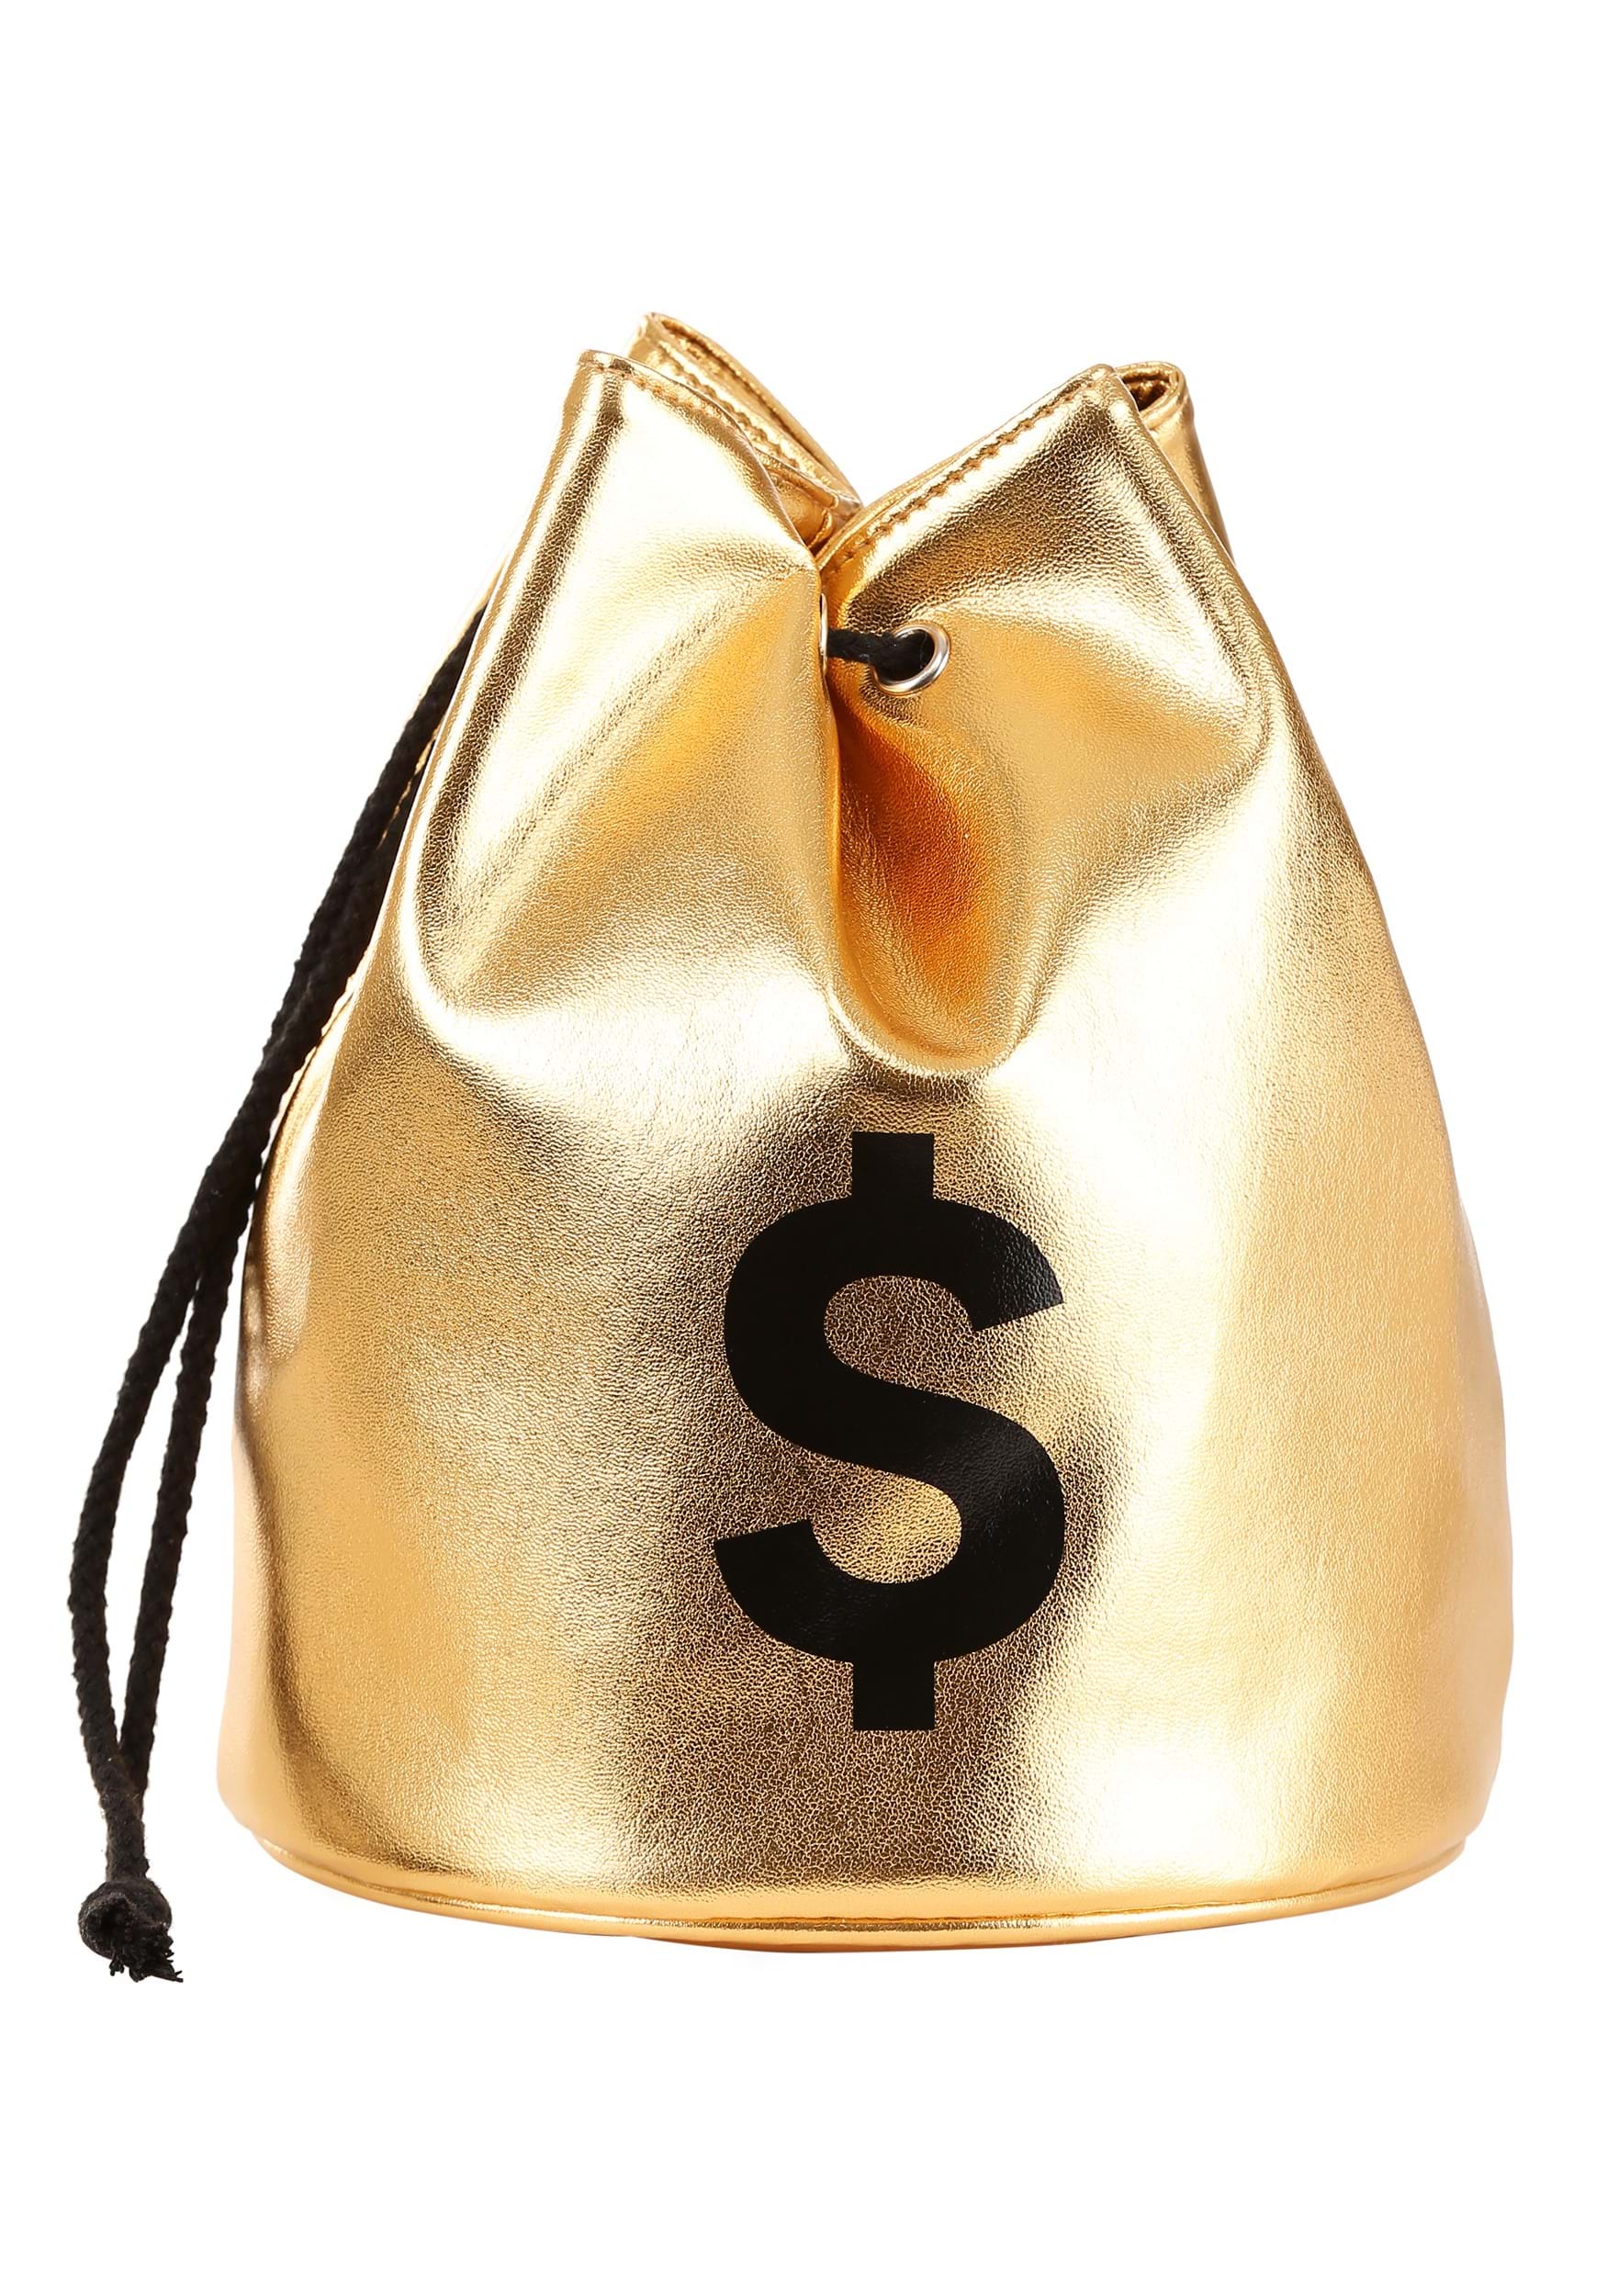 Bank Robber Money Bag Accessory Prop